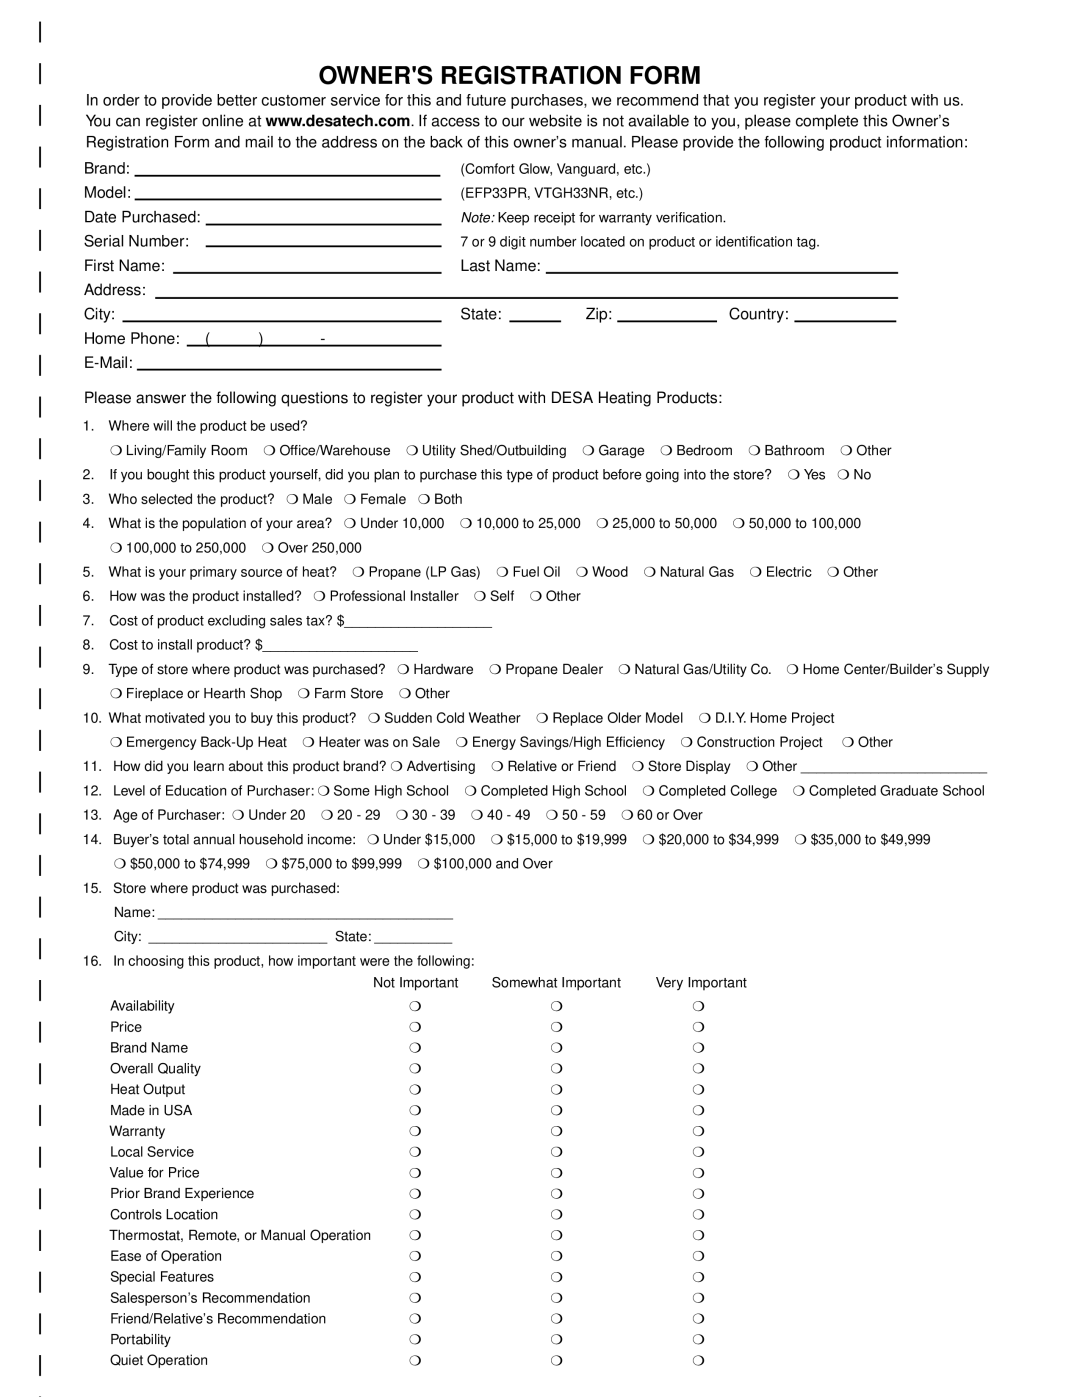 Vanguard Heating WMH26TNB installation manual Owners Registration Form 